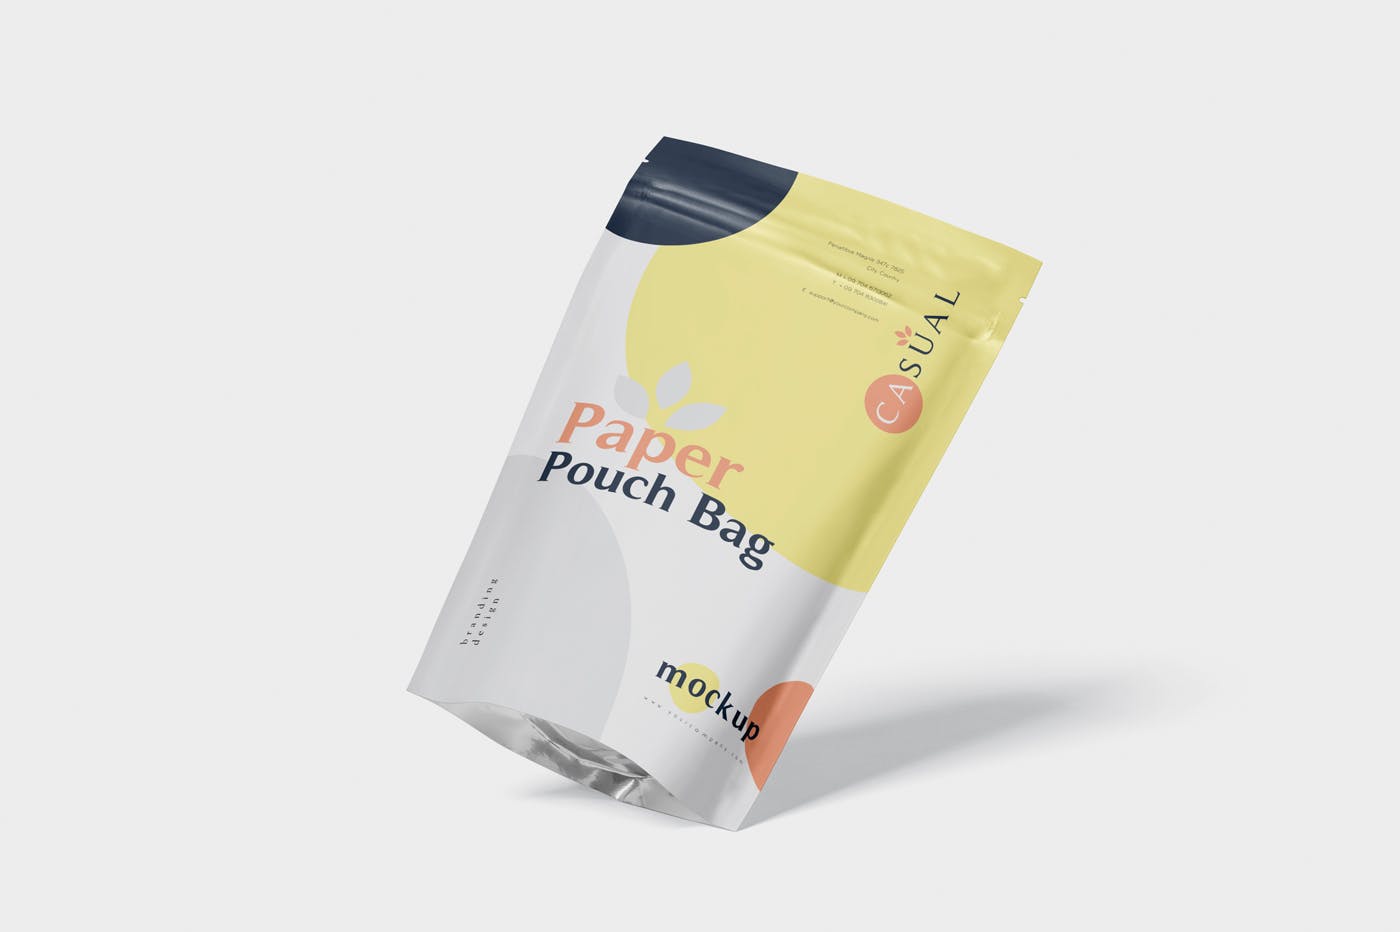 食品自封袋包装设计效果图蚂蚁素材精选 Paper Pouch Bag Mockup – Large Size插图(4)